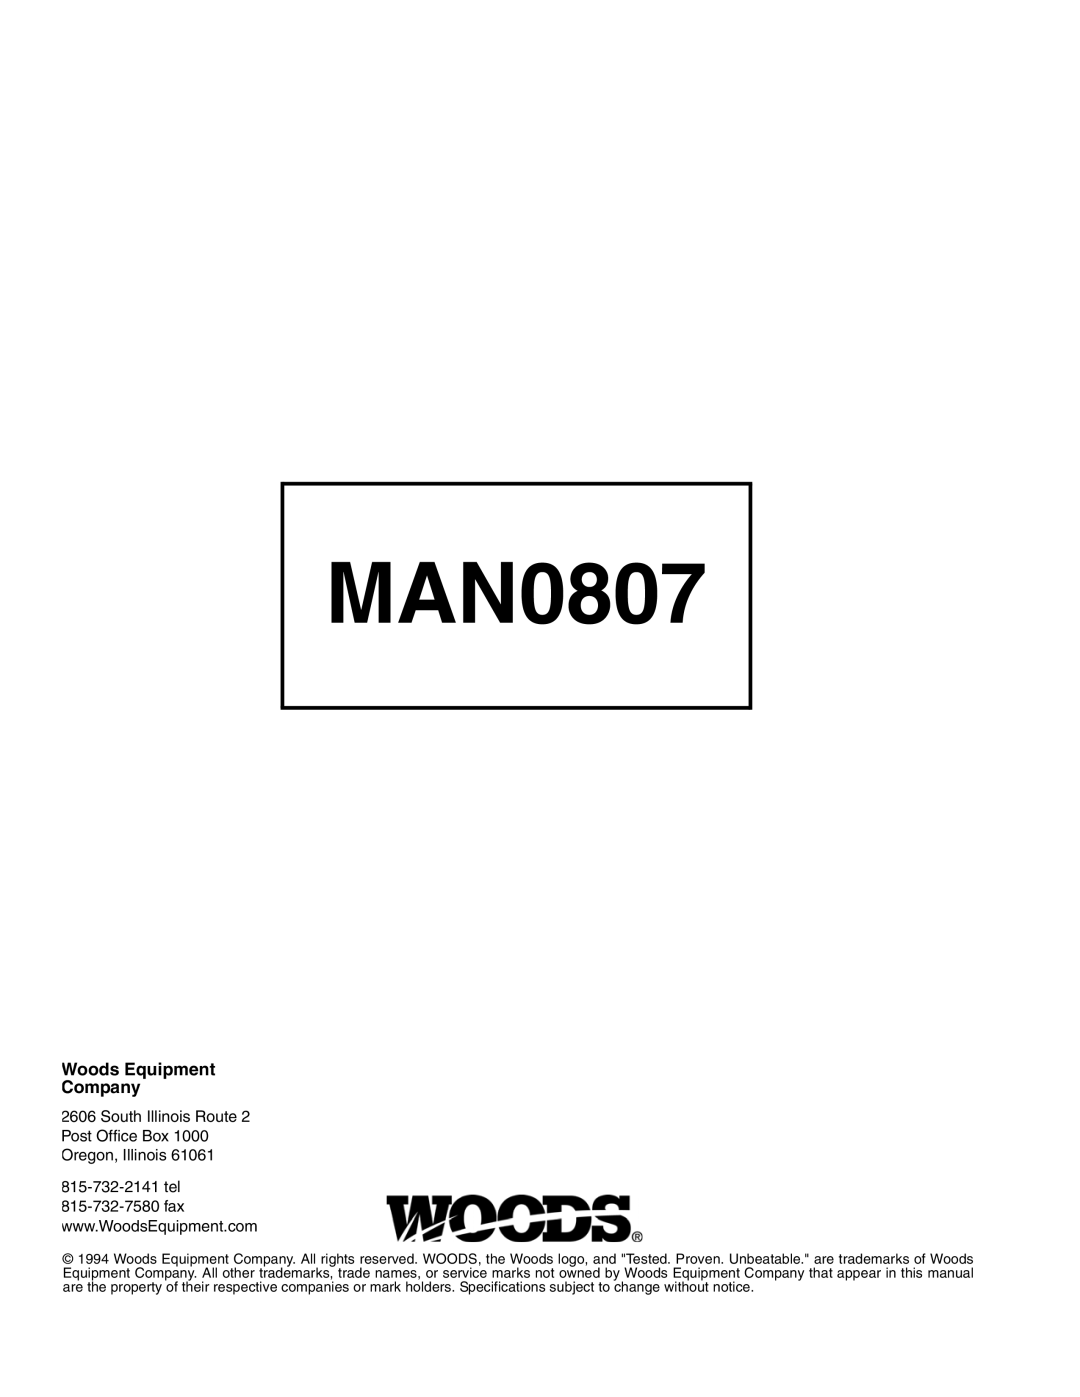 Woods Equipment 2104045 installation manual MAN0807, Woods Equipment Company 